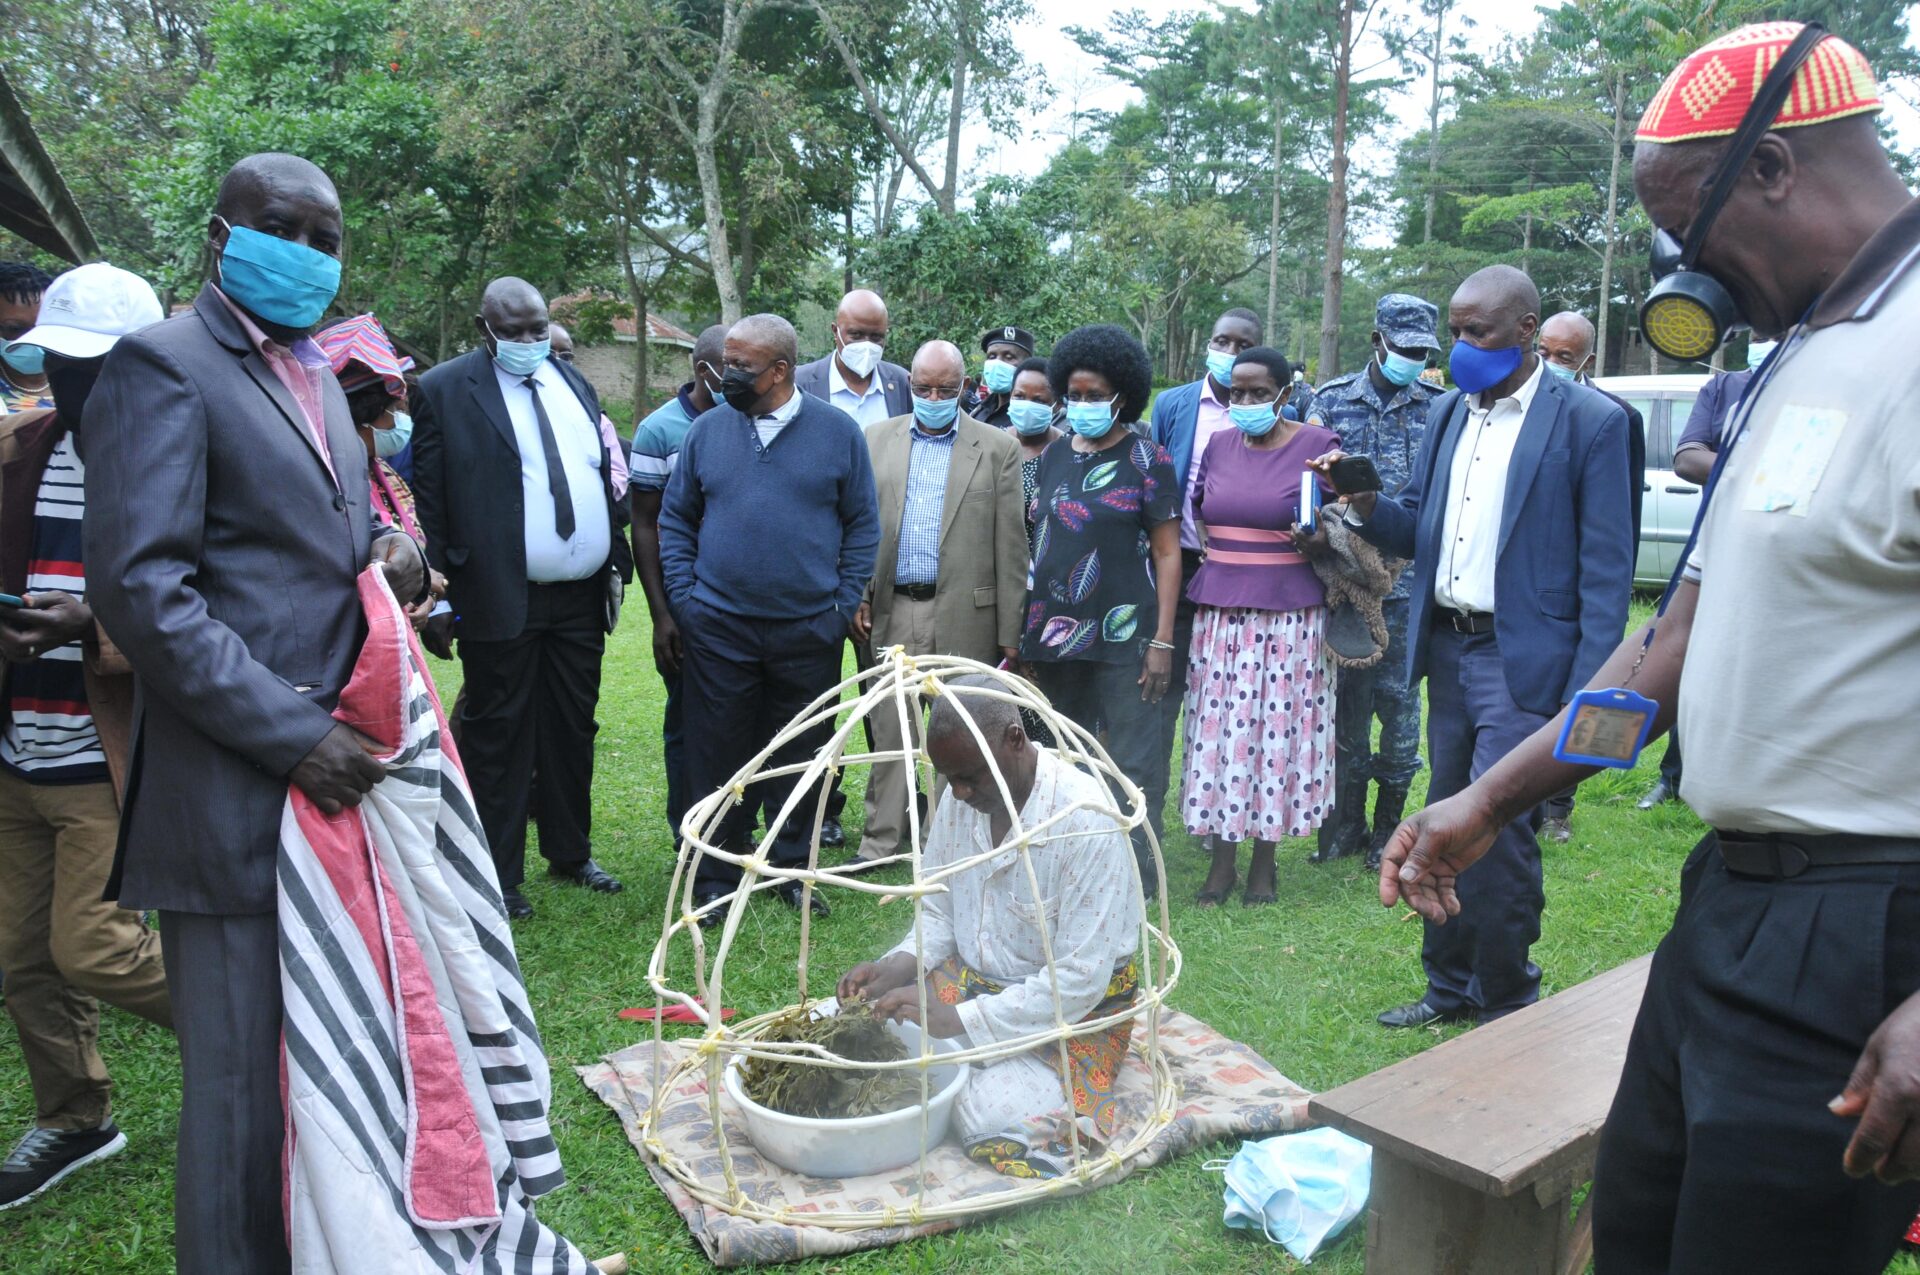 The World Health Organization visits Rukararwe